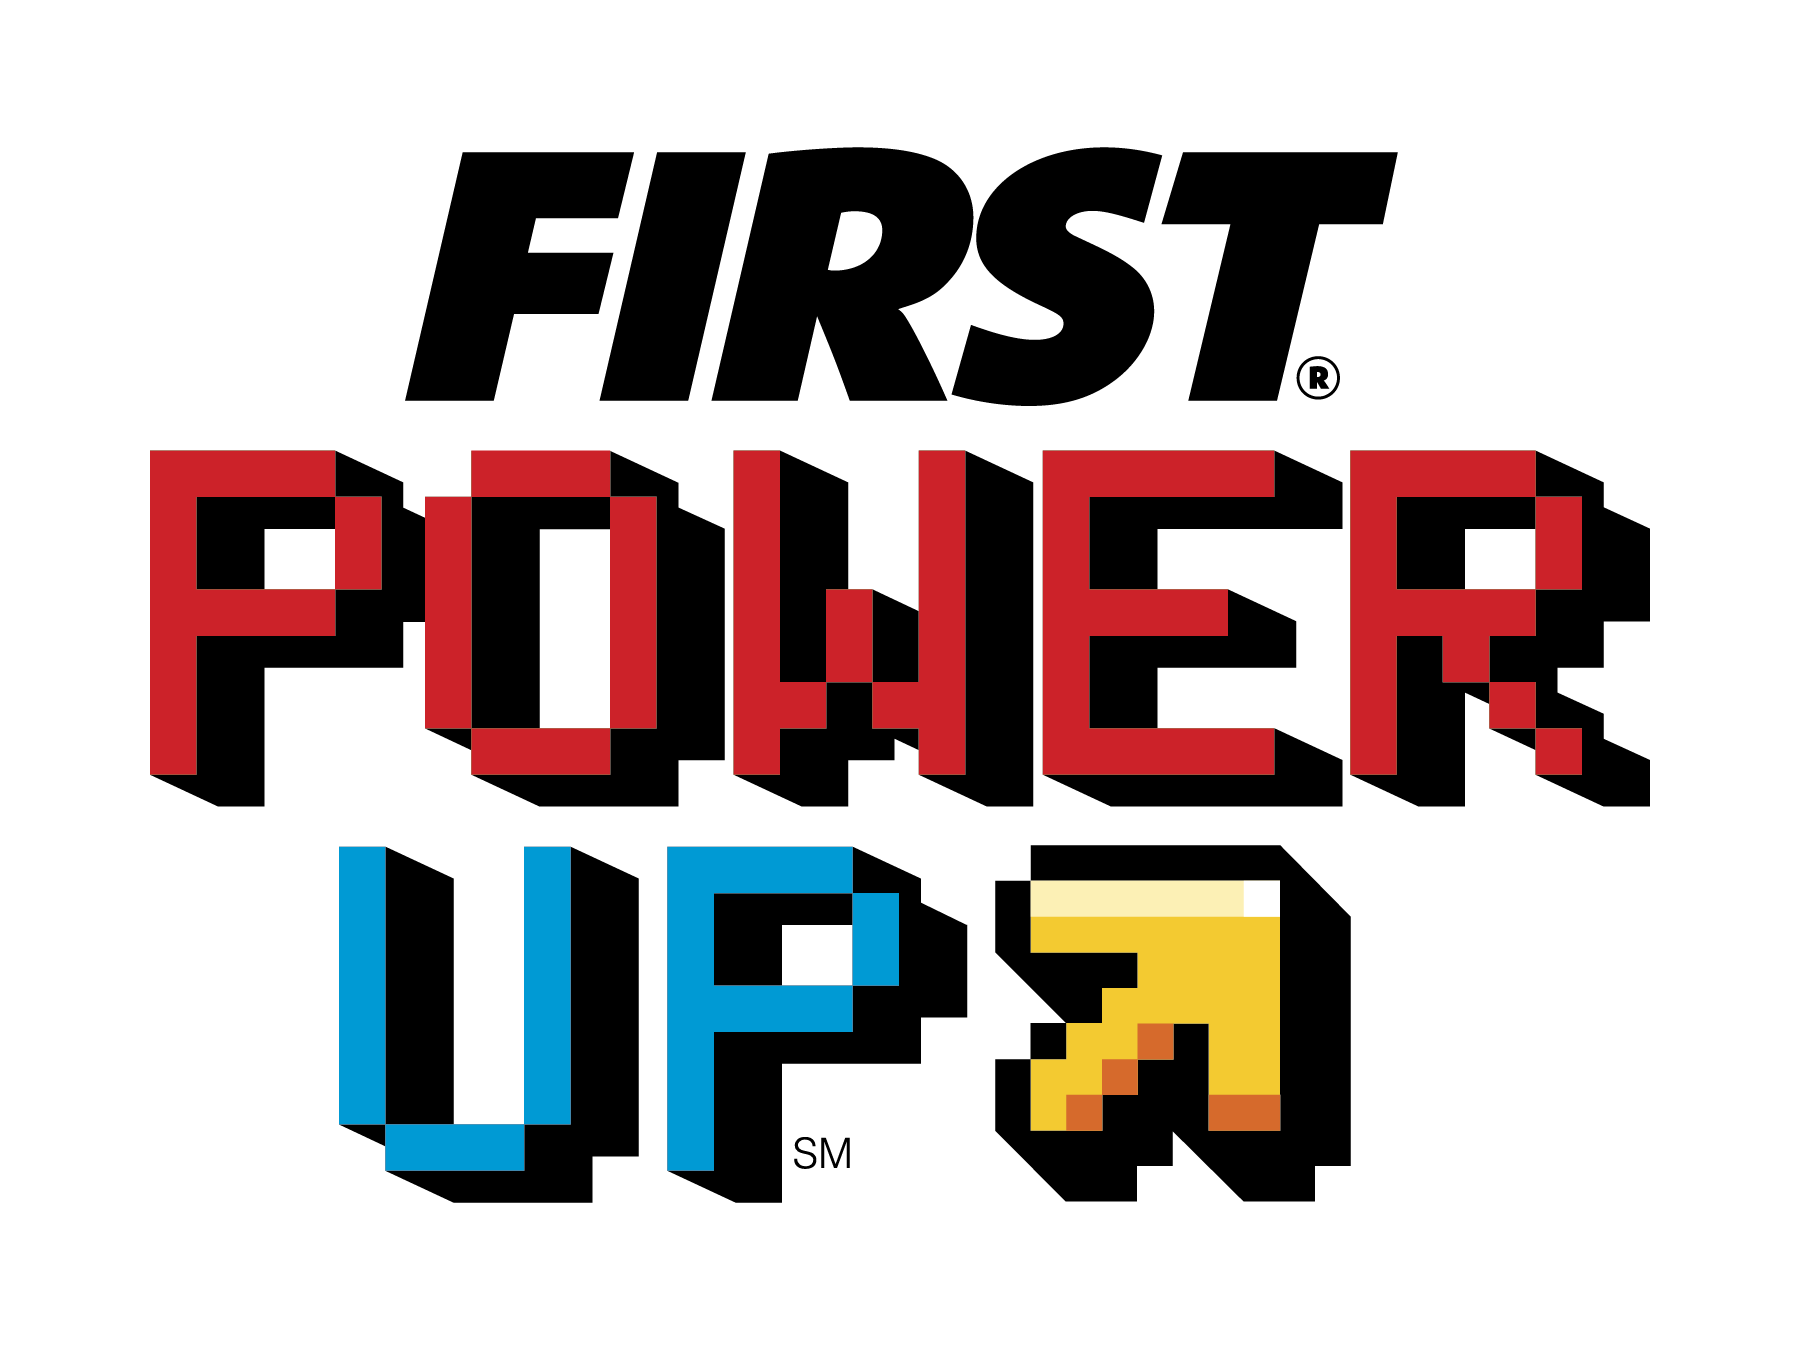 Power Up Logo